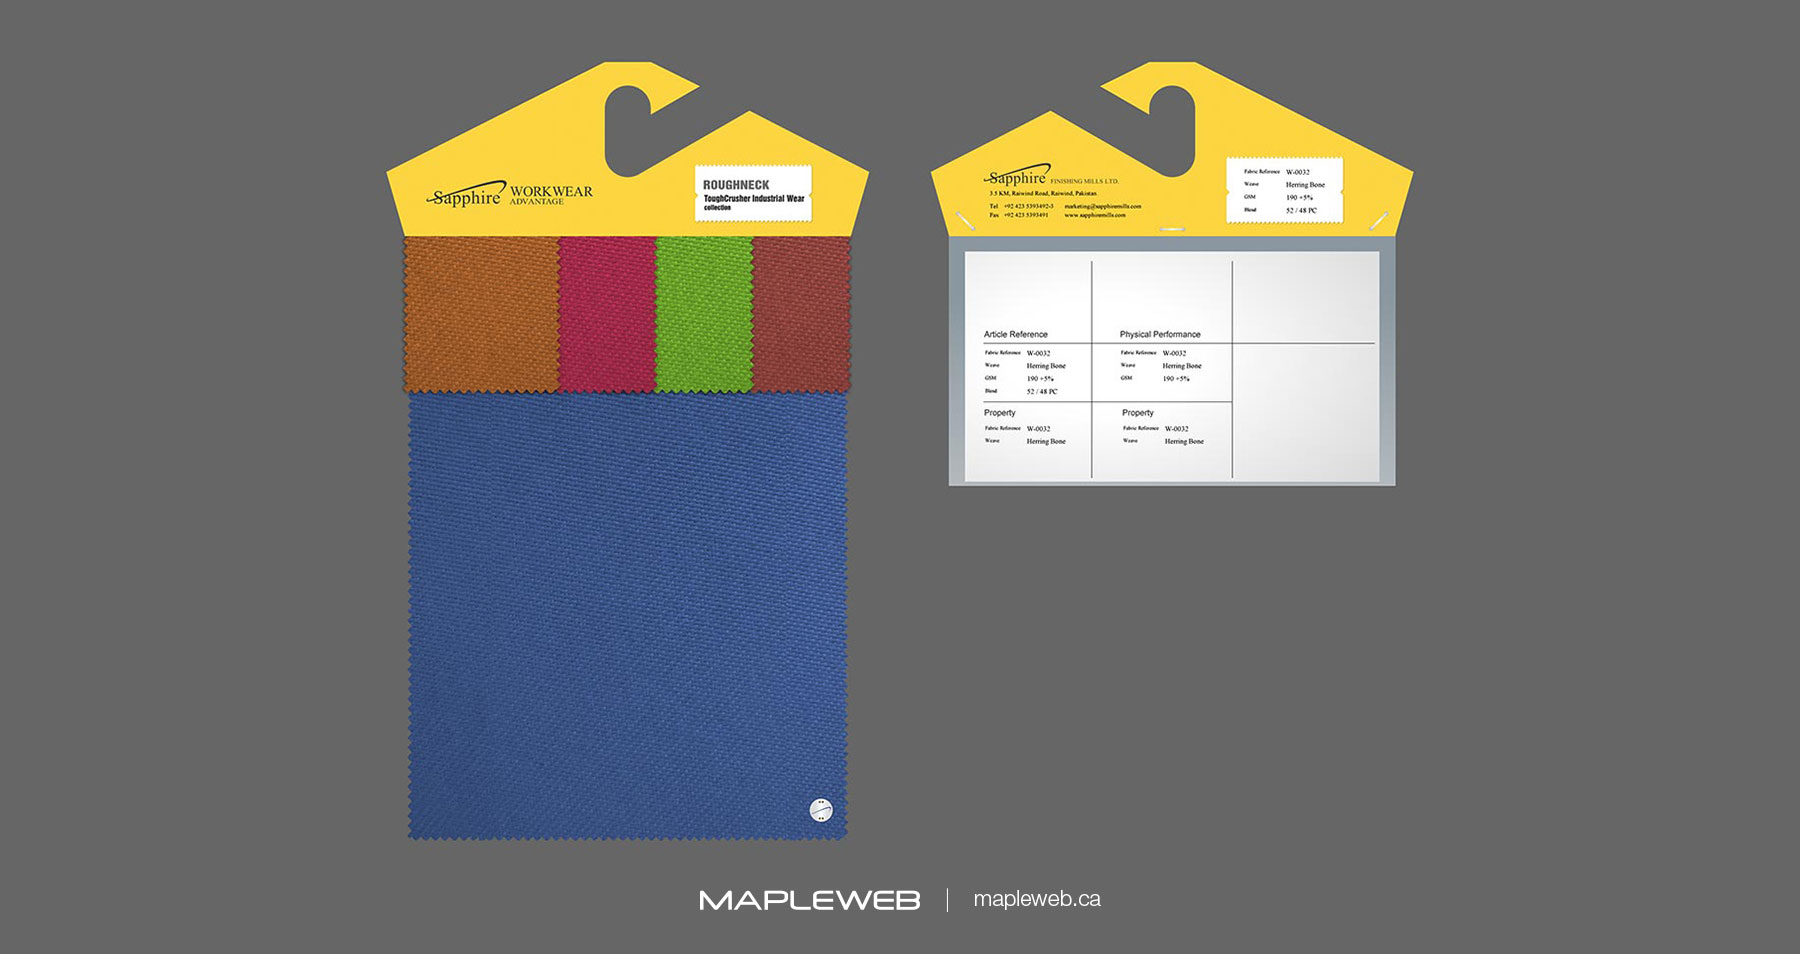  Sapphire Hanger and Cotton Matts Brand design by Mapleweb